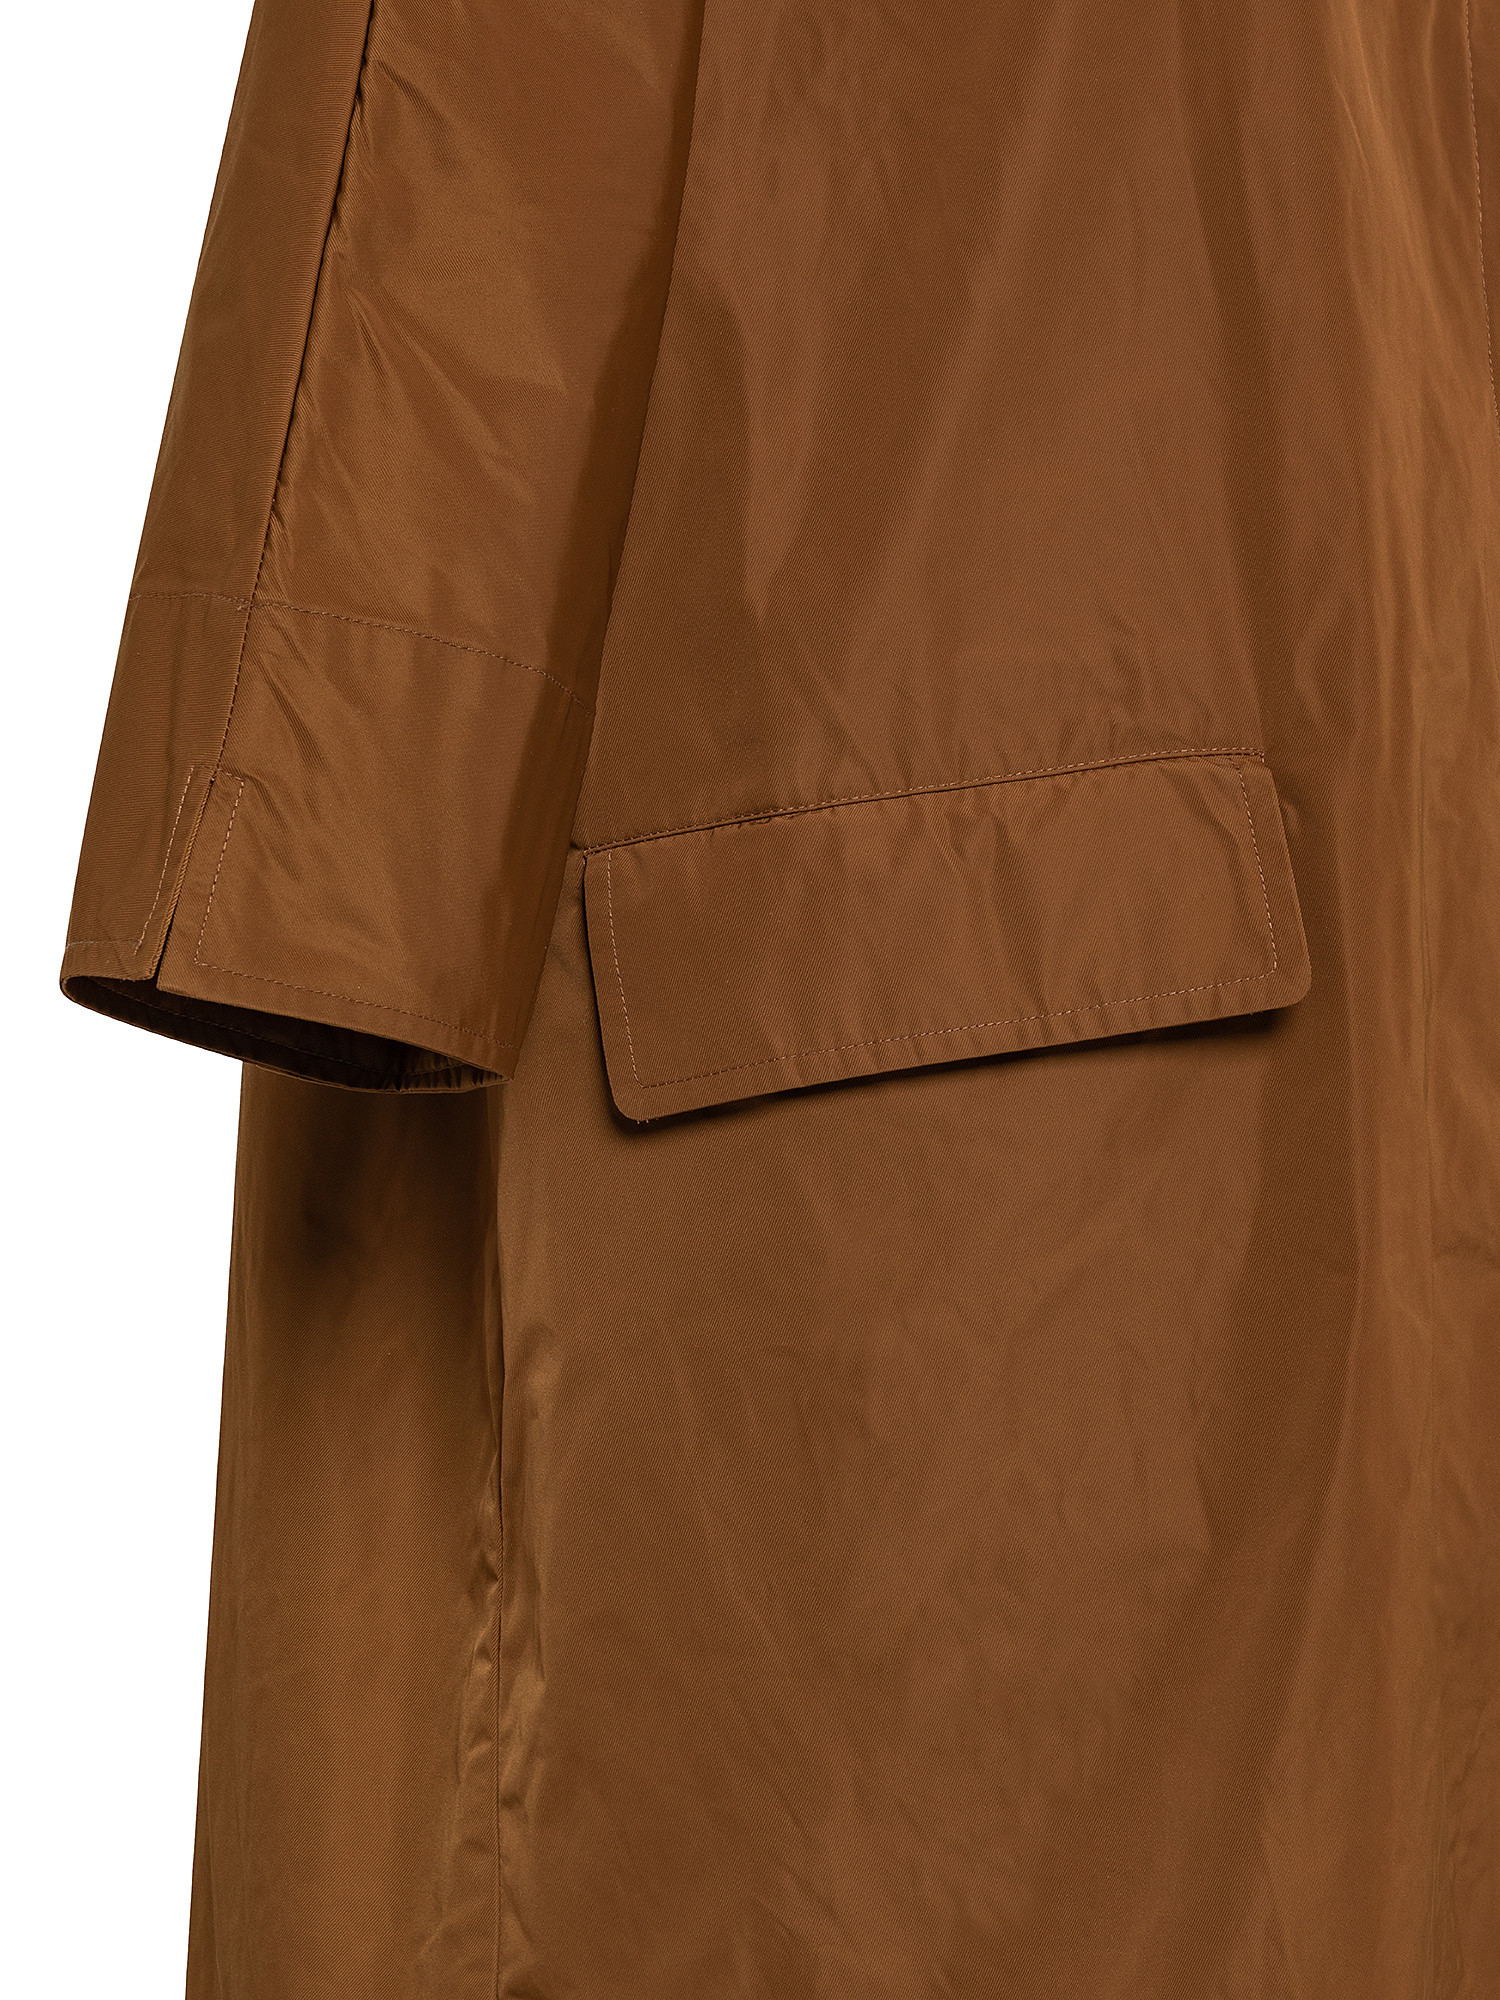 Coat, Brown, large image number 2